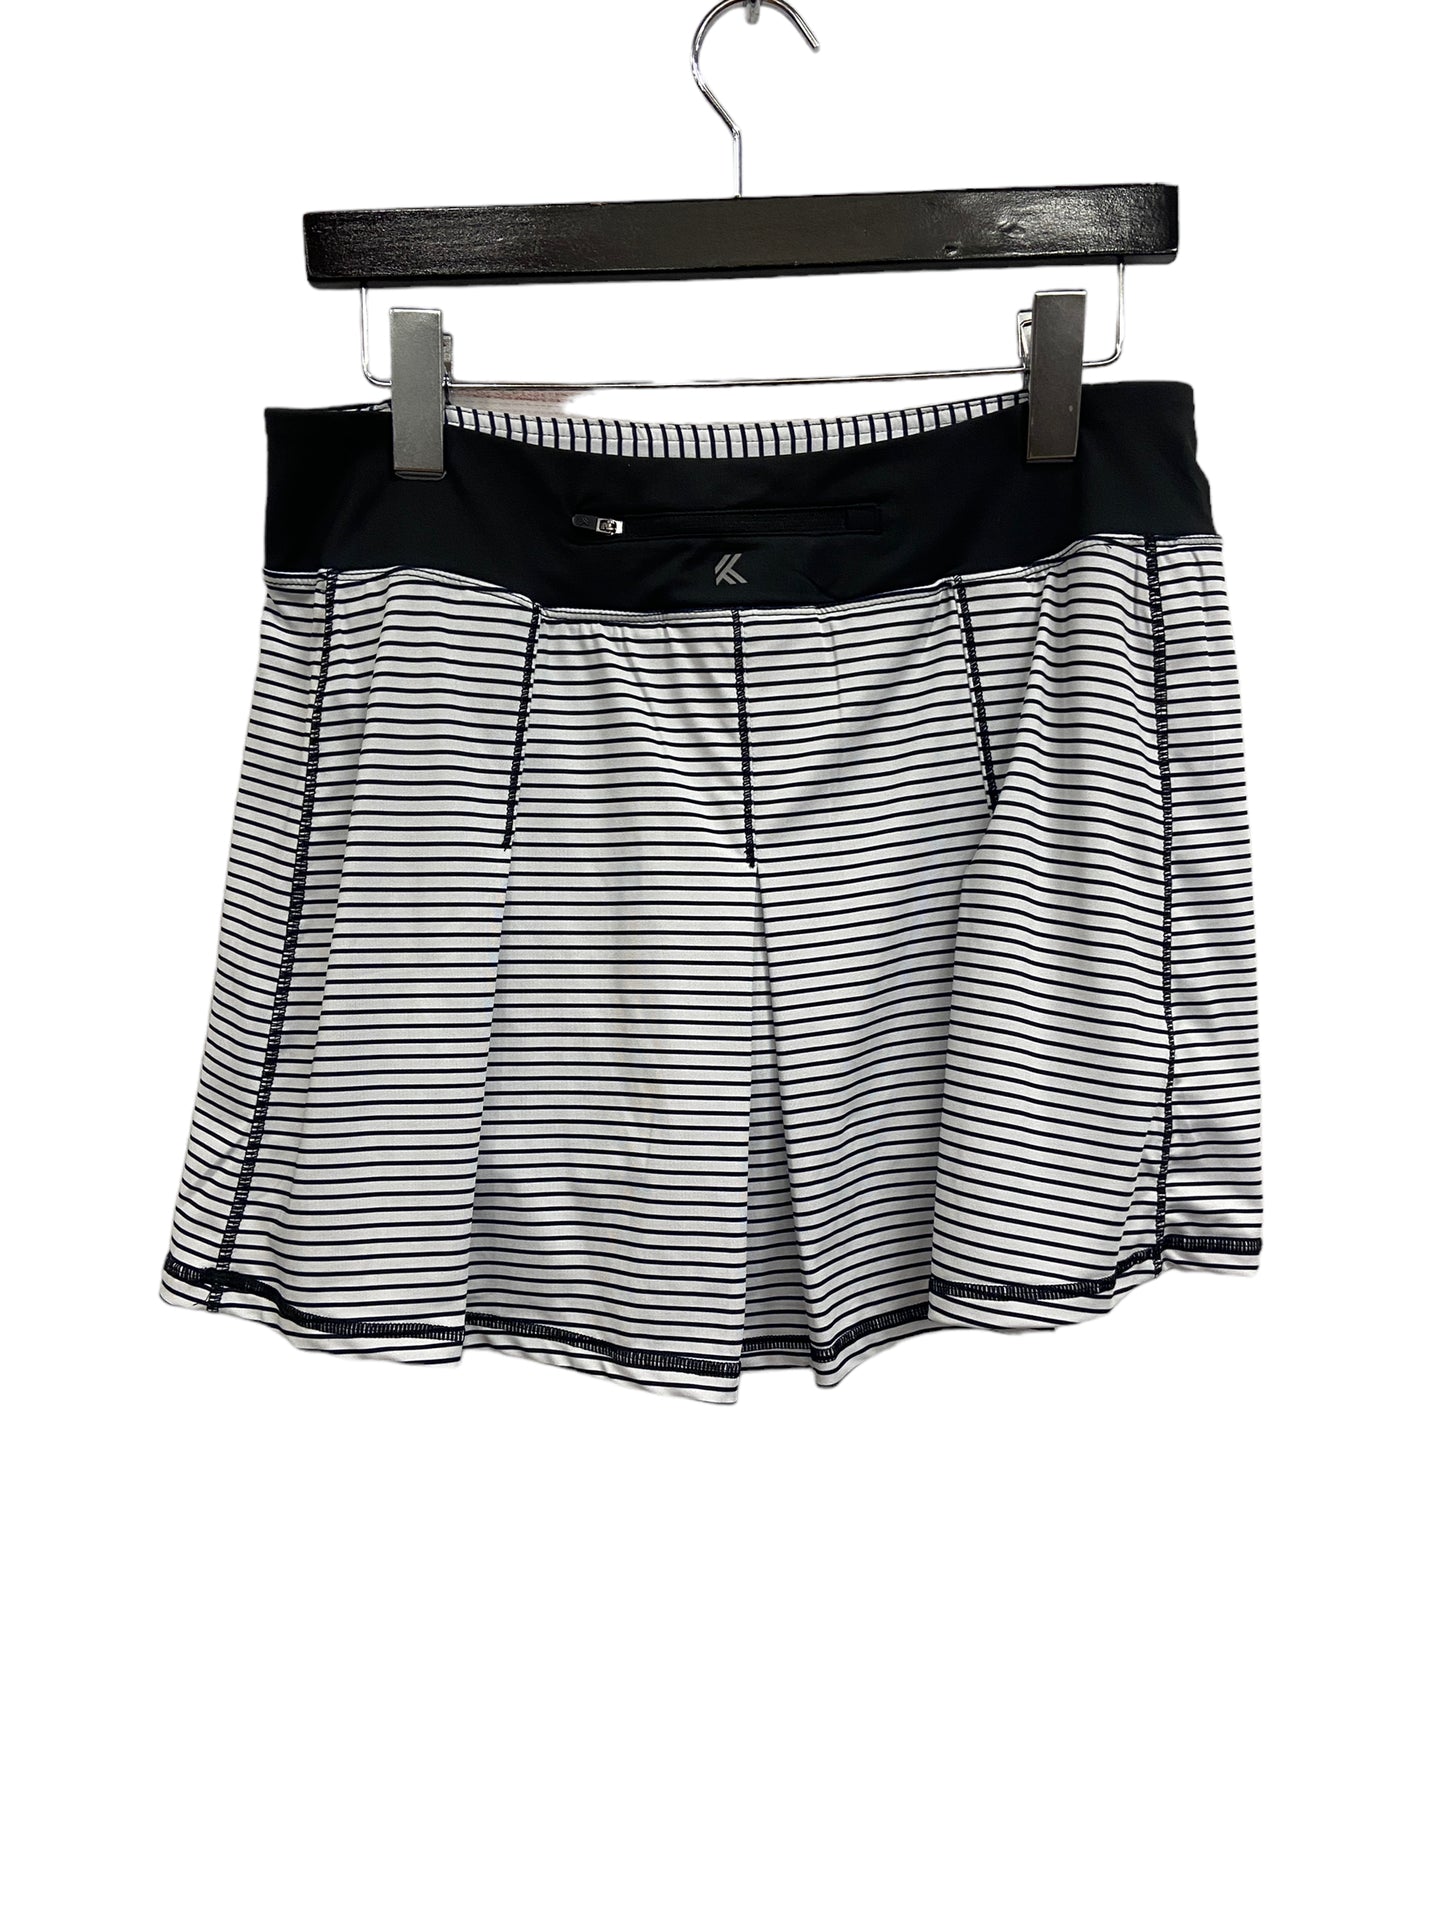 Athletic Skirt Skort By Kyodan  Size: L